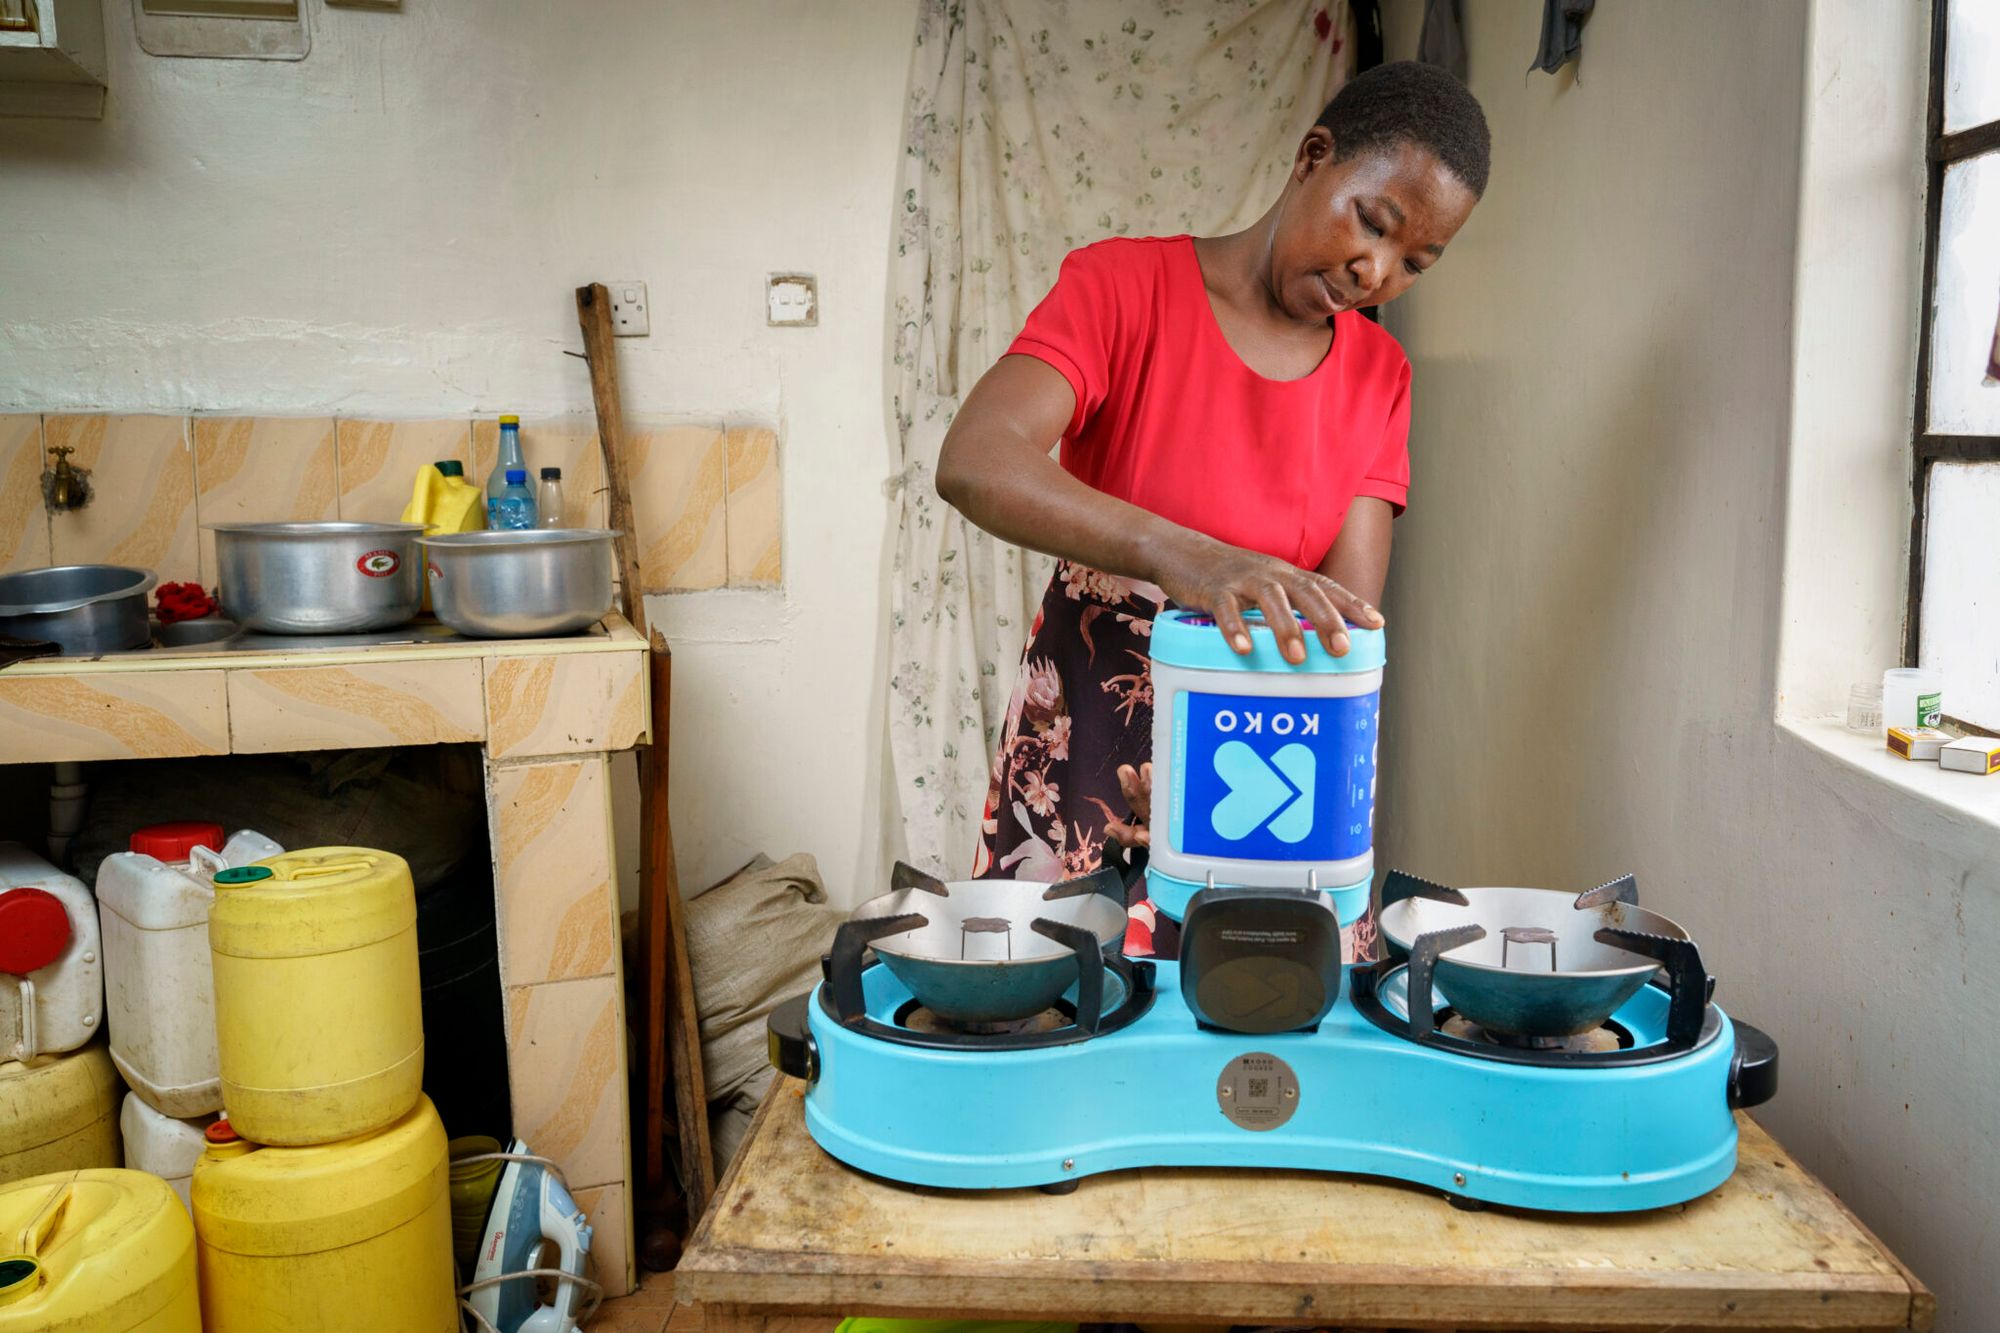 KOKO Networks: Transforming Energy & Appliance Use in Kenya